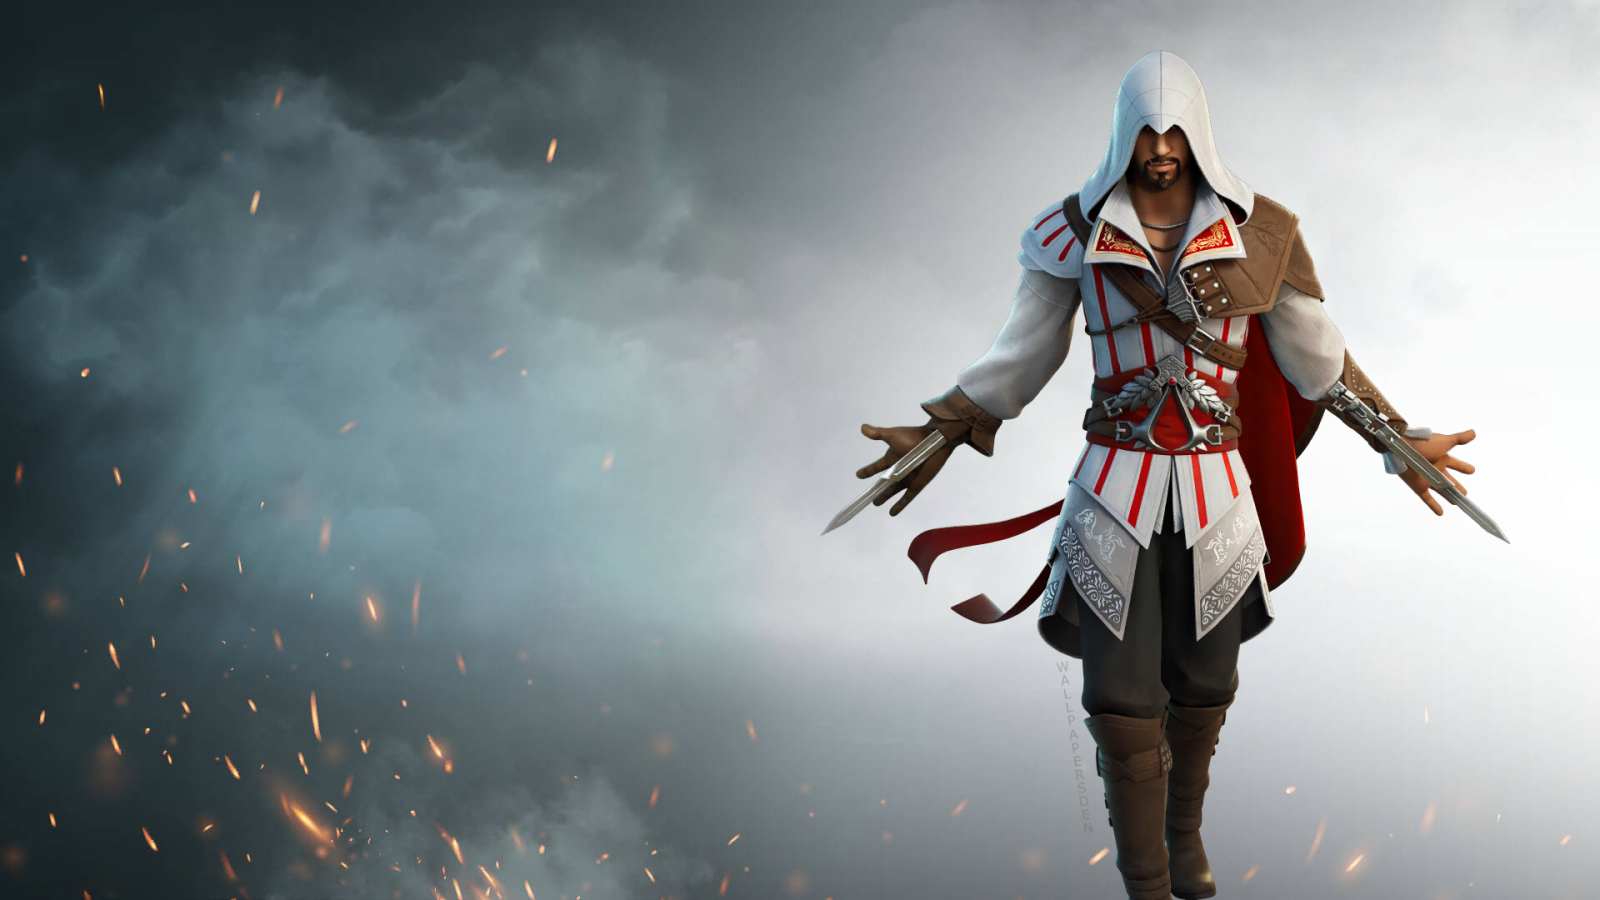 Fortnite Assassins Creed Skin - Original image